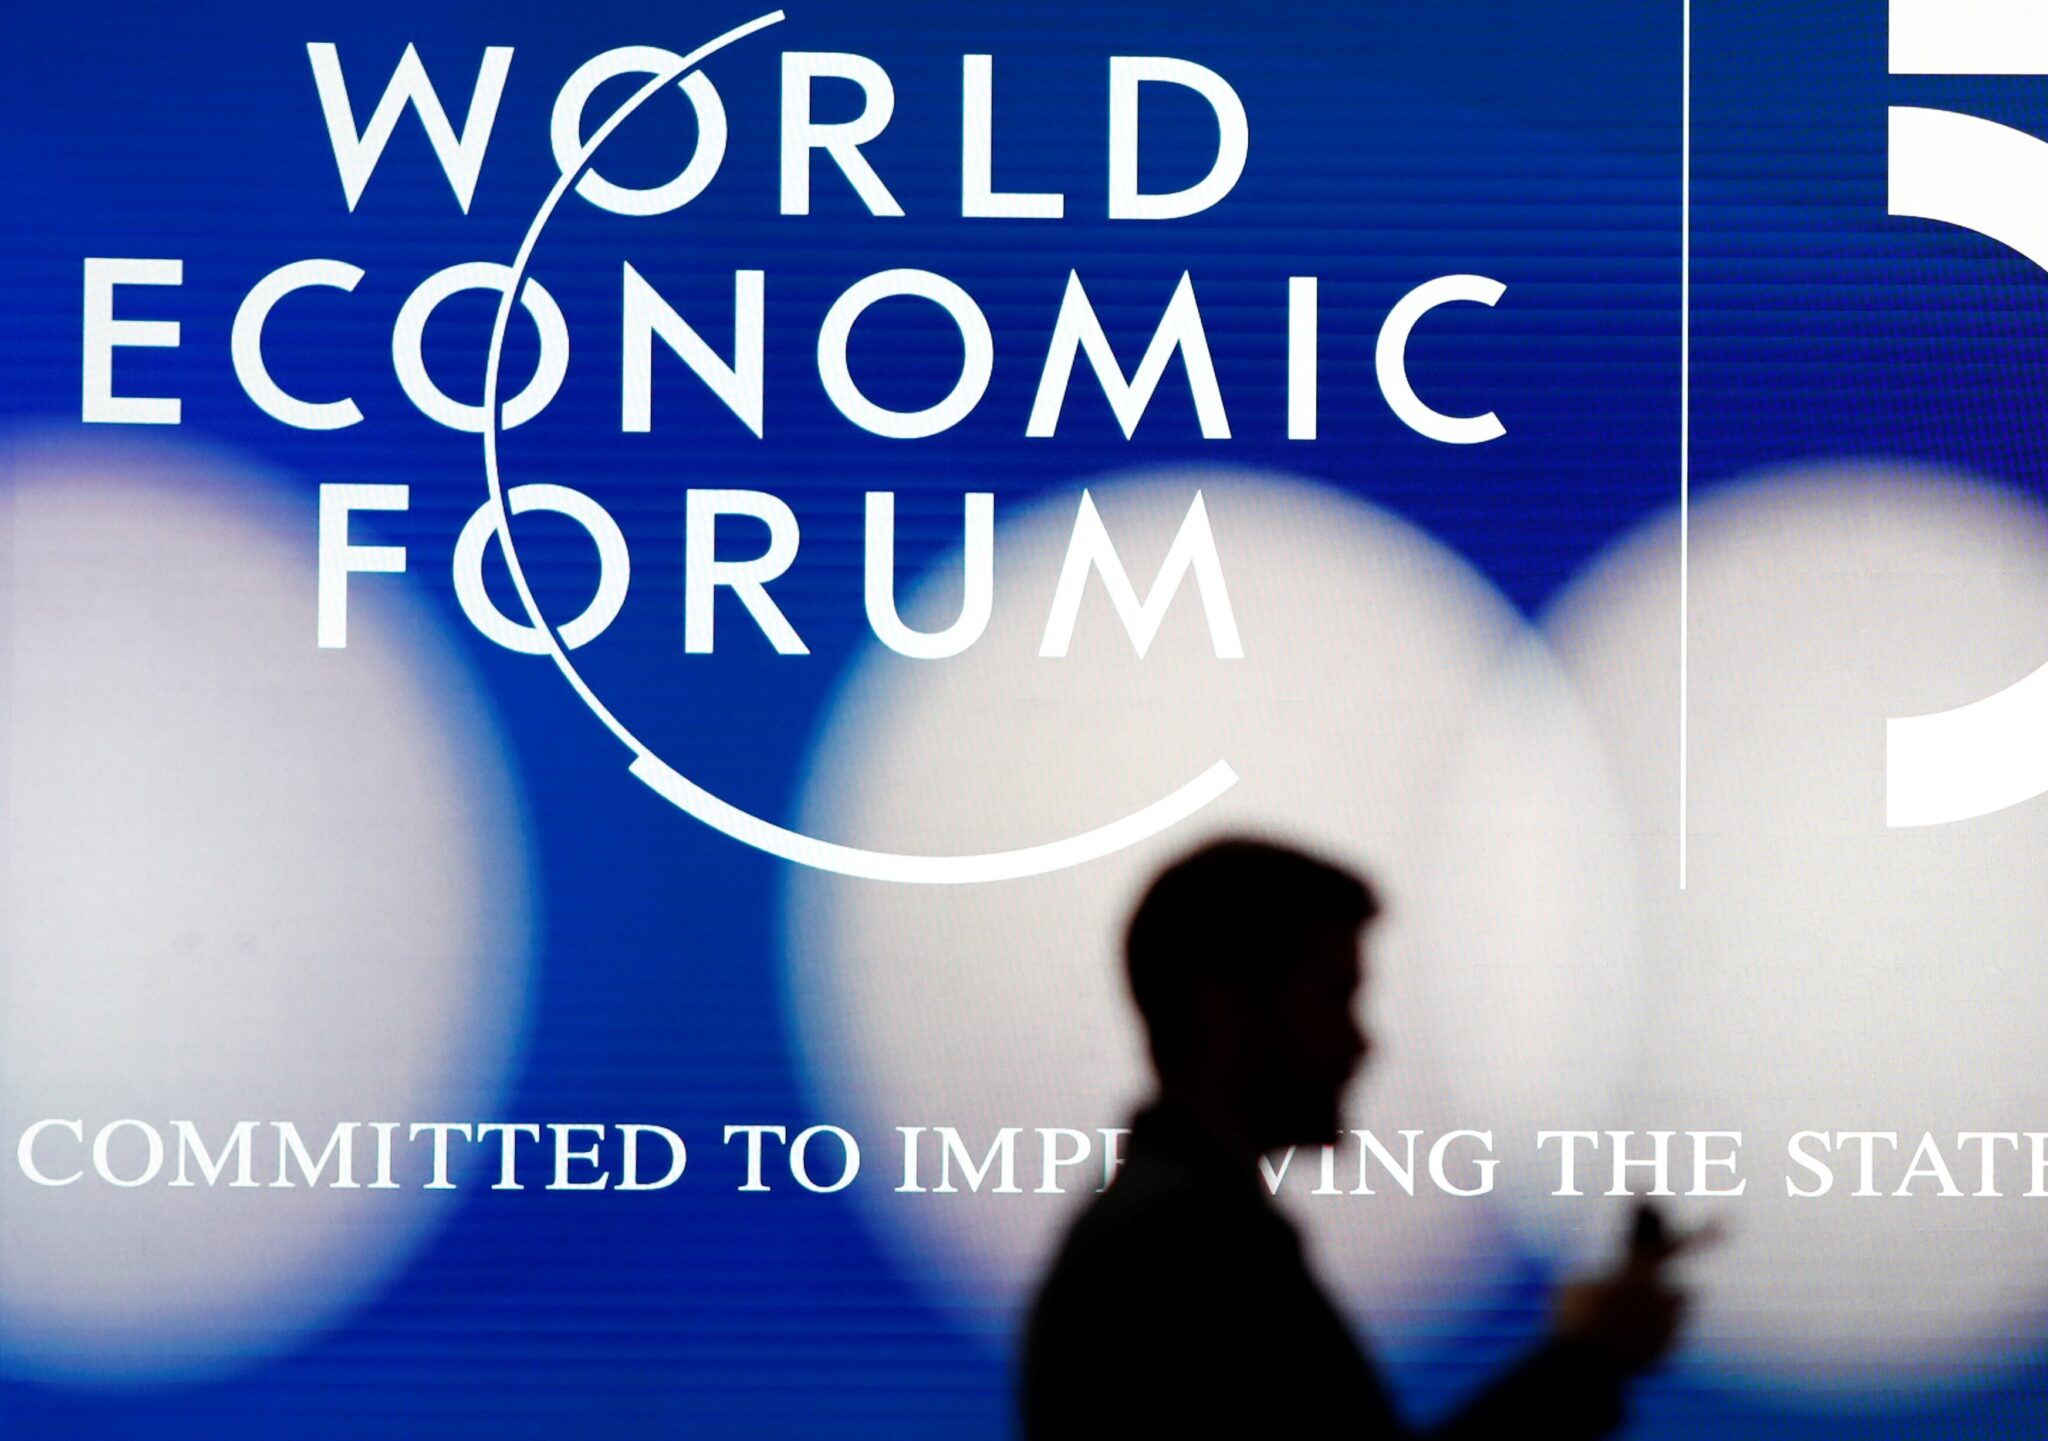 Aplazan por segundo año consecutivo el Foro Económico Mundial de Davos por covid